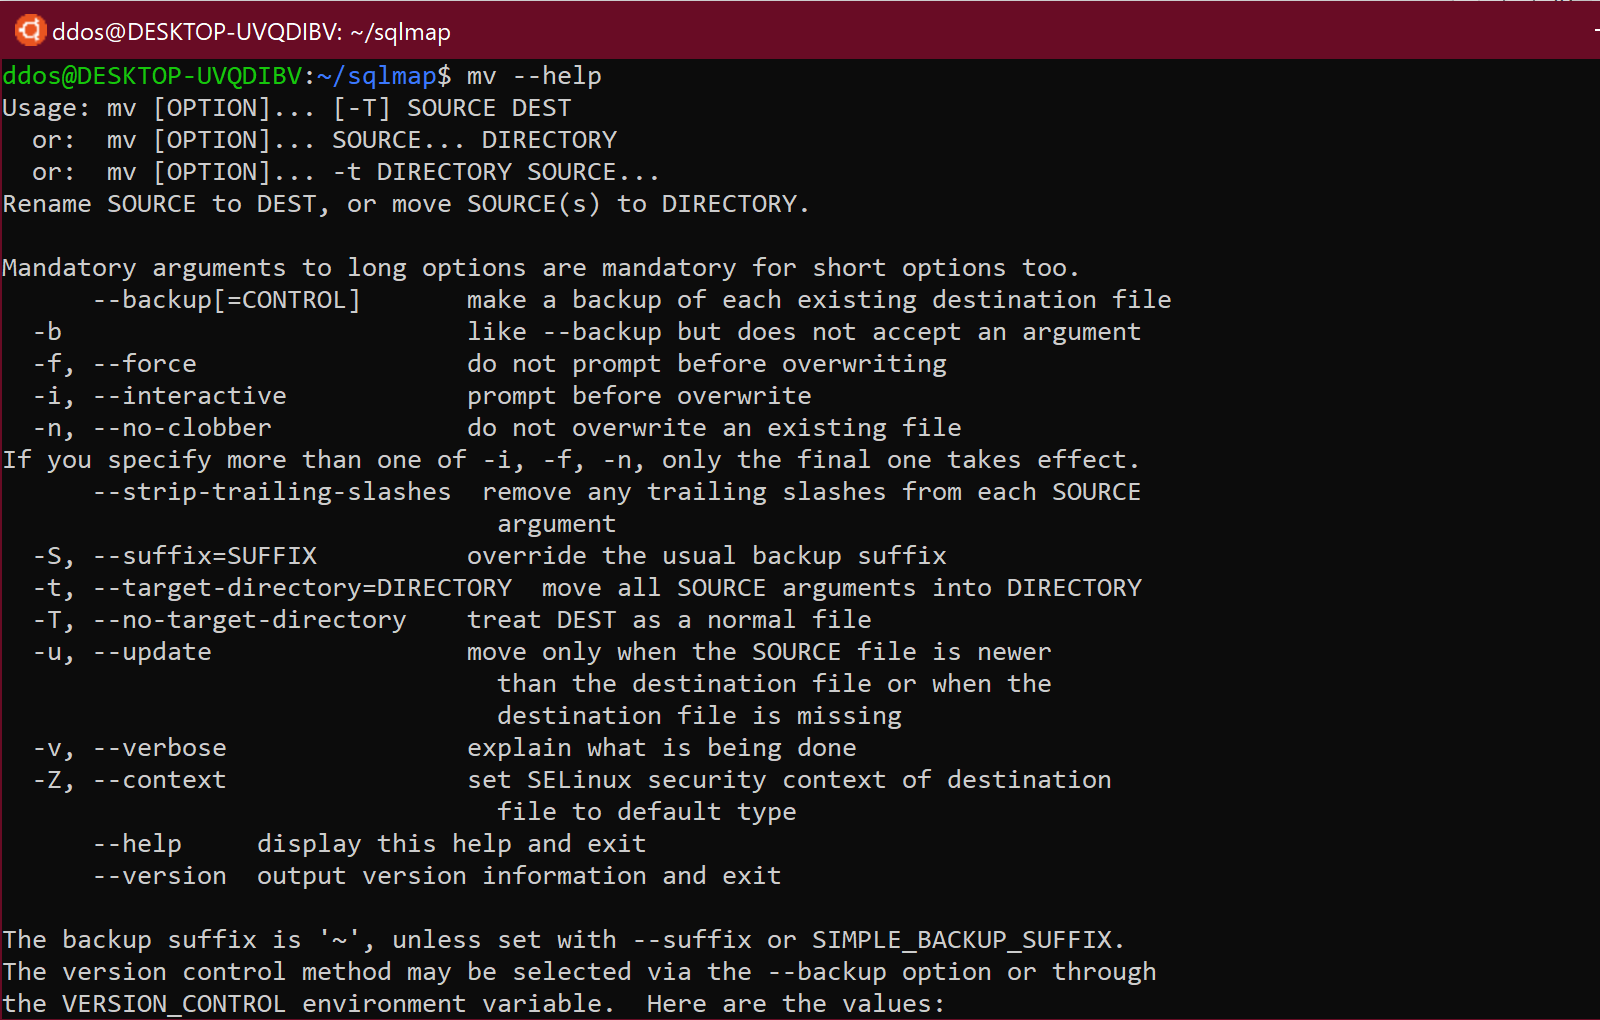 move file linux terminal